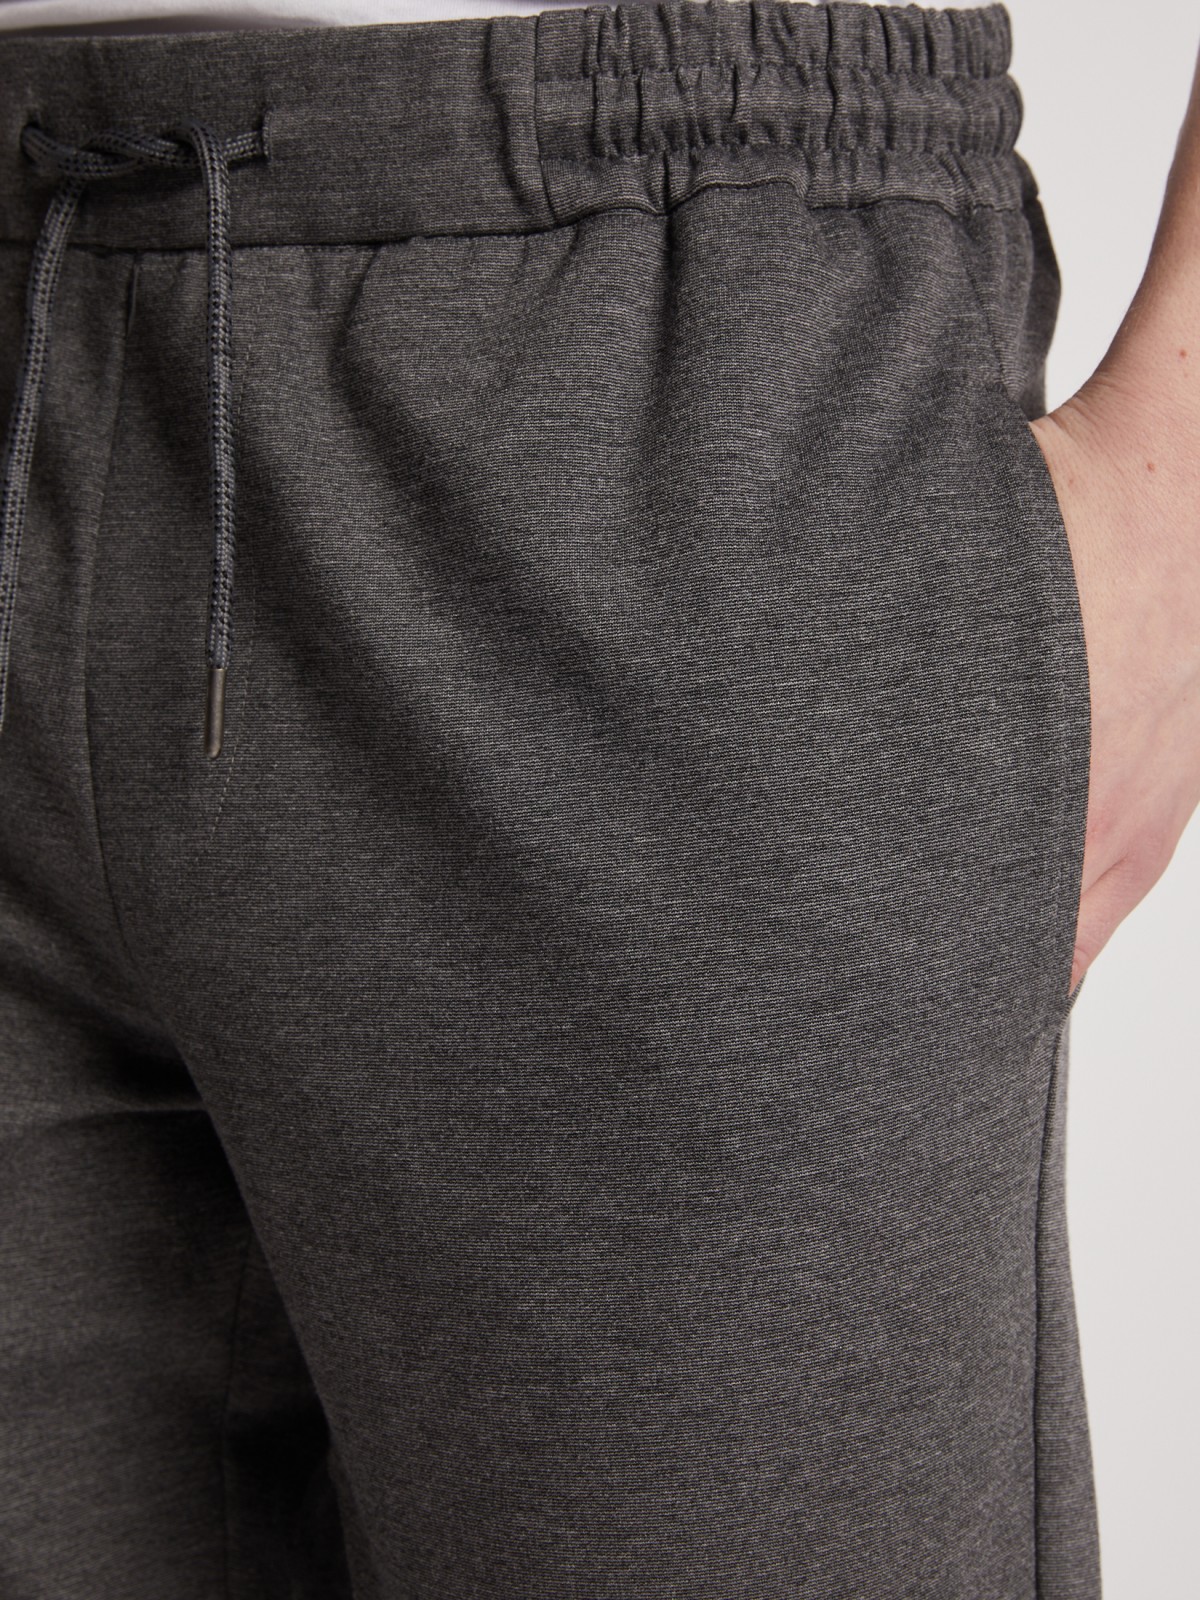 Спортивные брюки из трикотажа zolla 012317604011, цвет темно-серый, размер S - фото 4